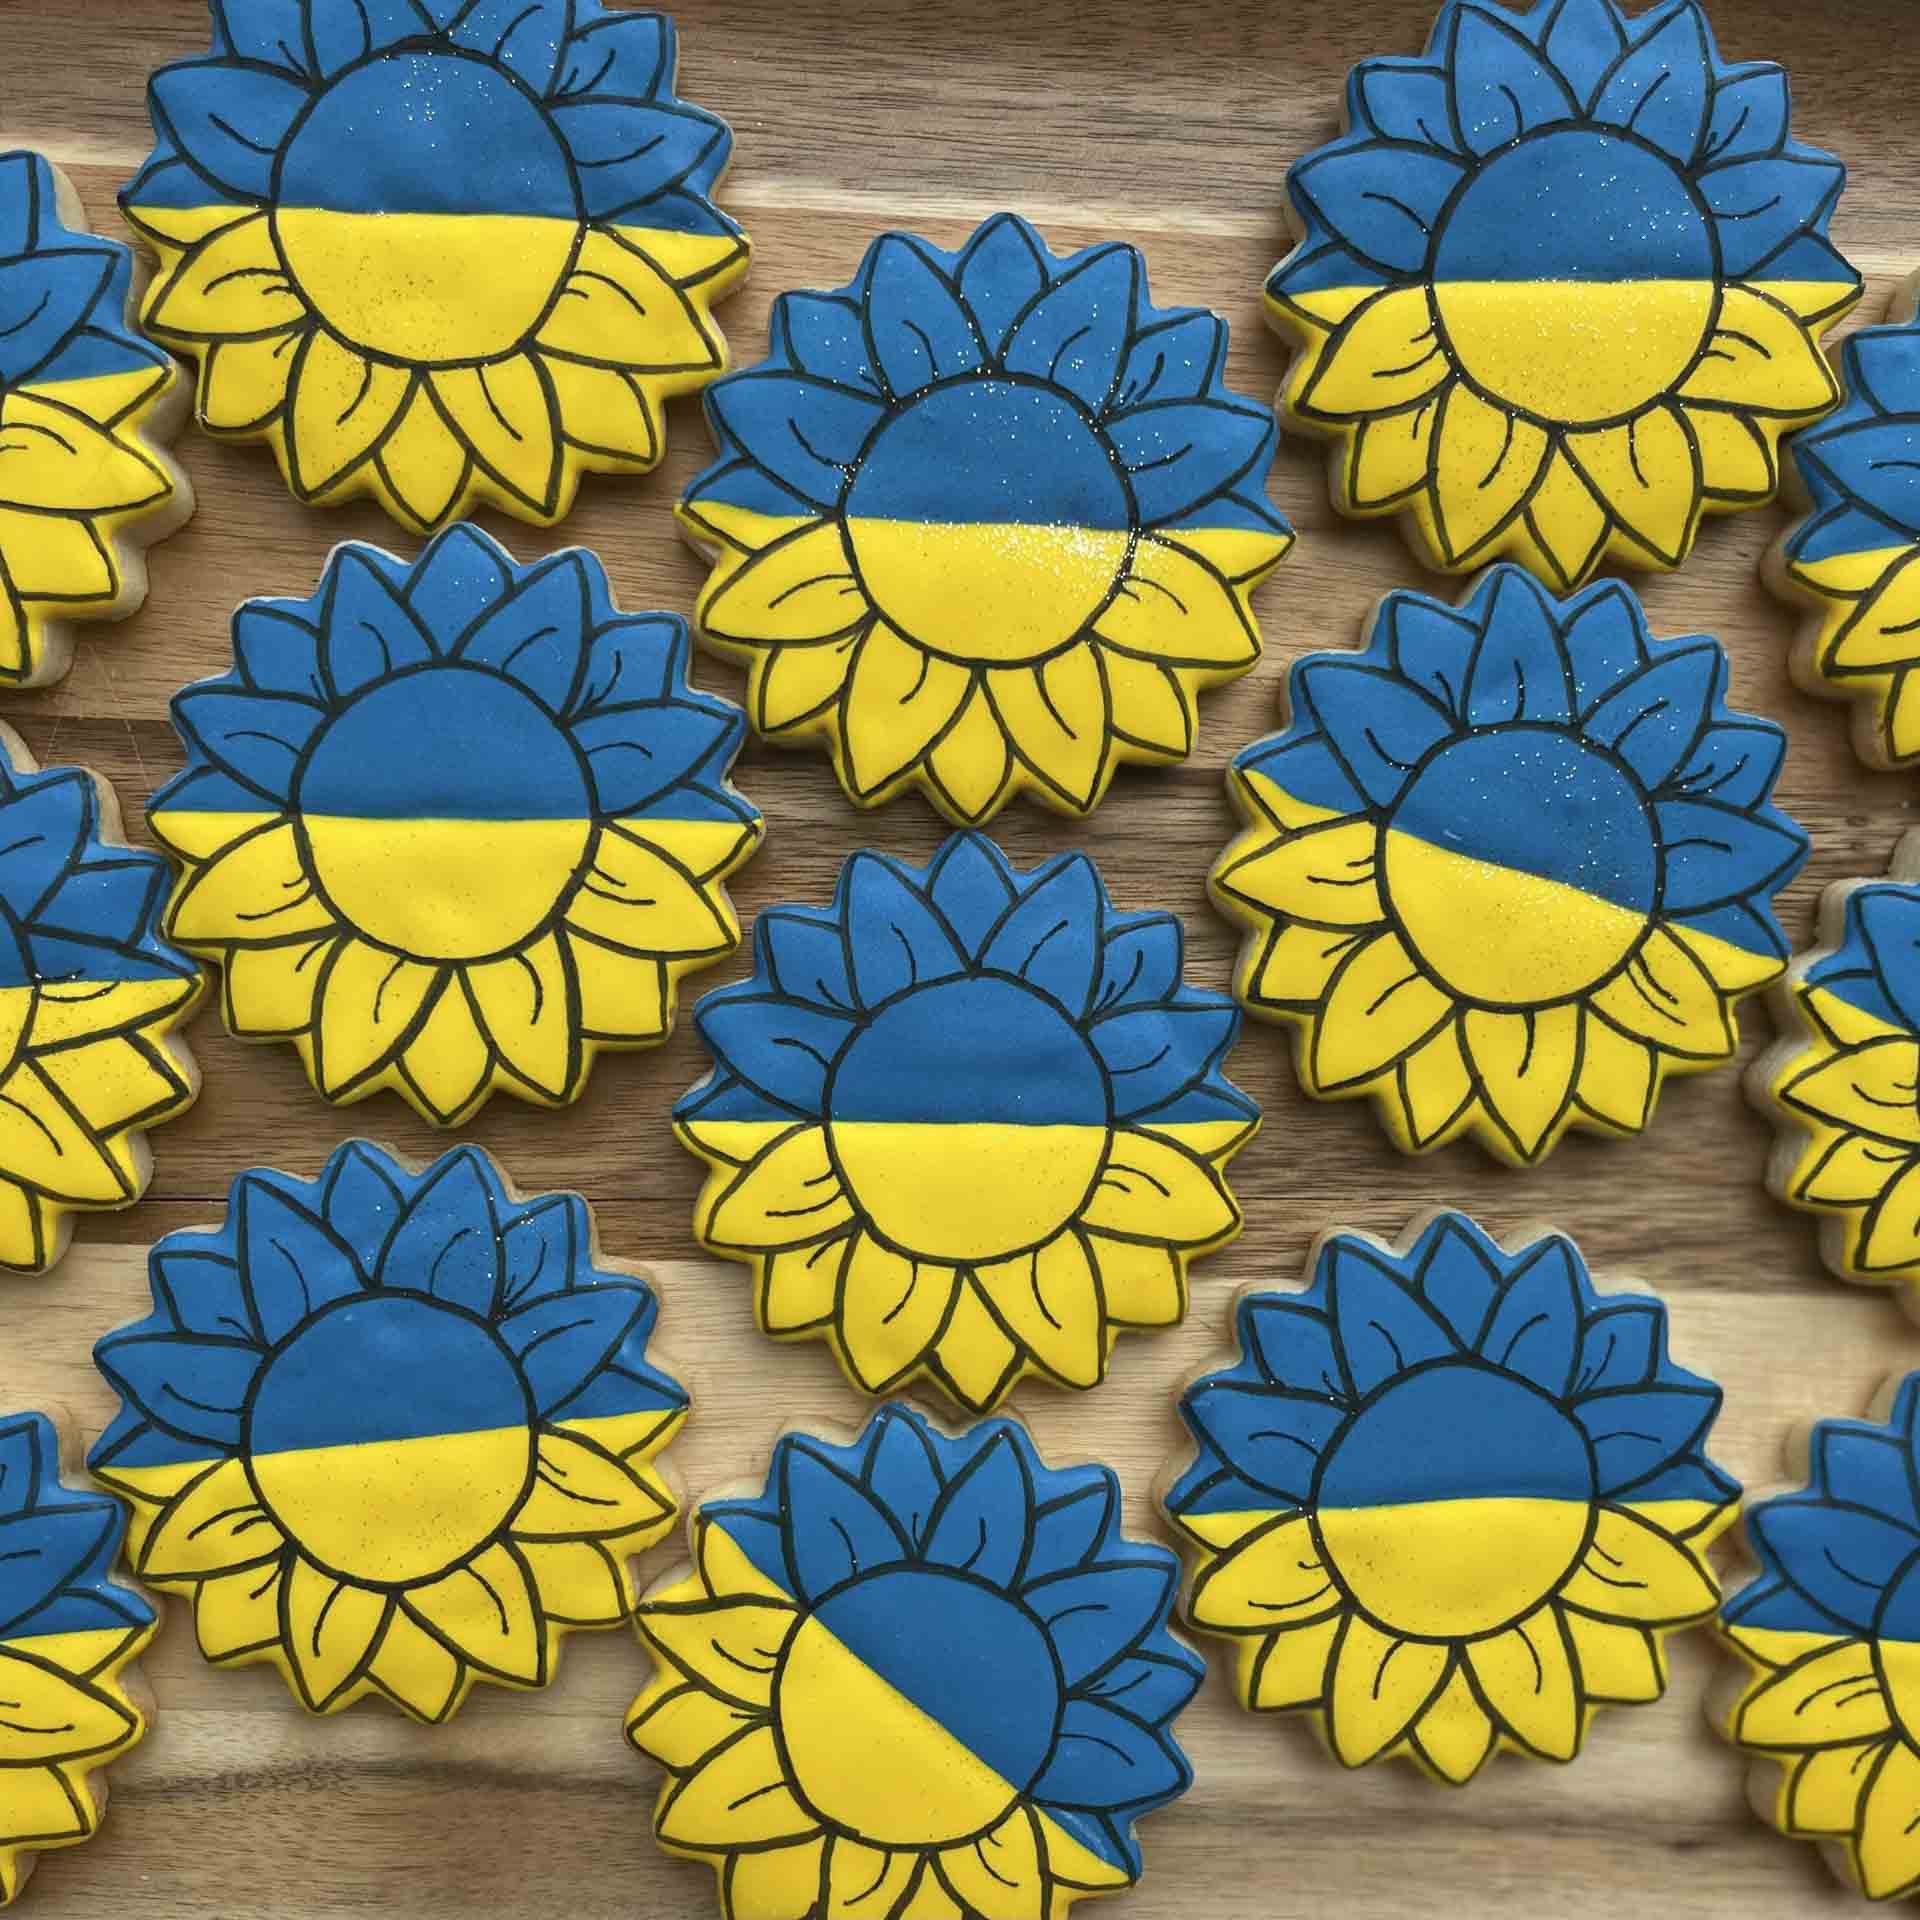 Ukrainian Support Flower Shaped Sugar Cookies